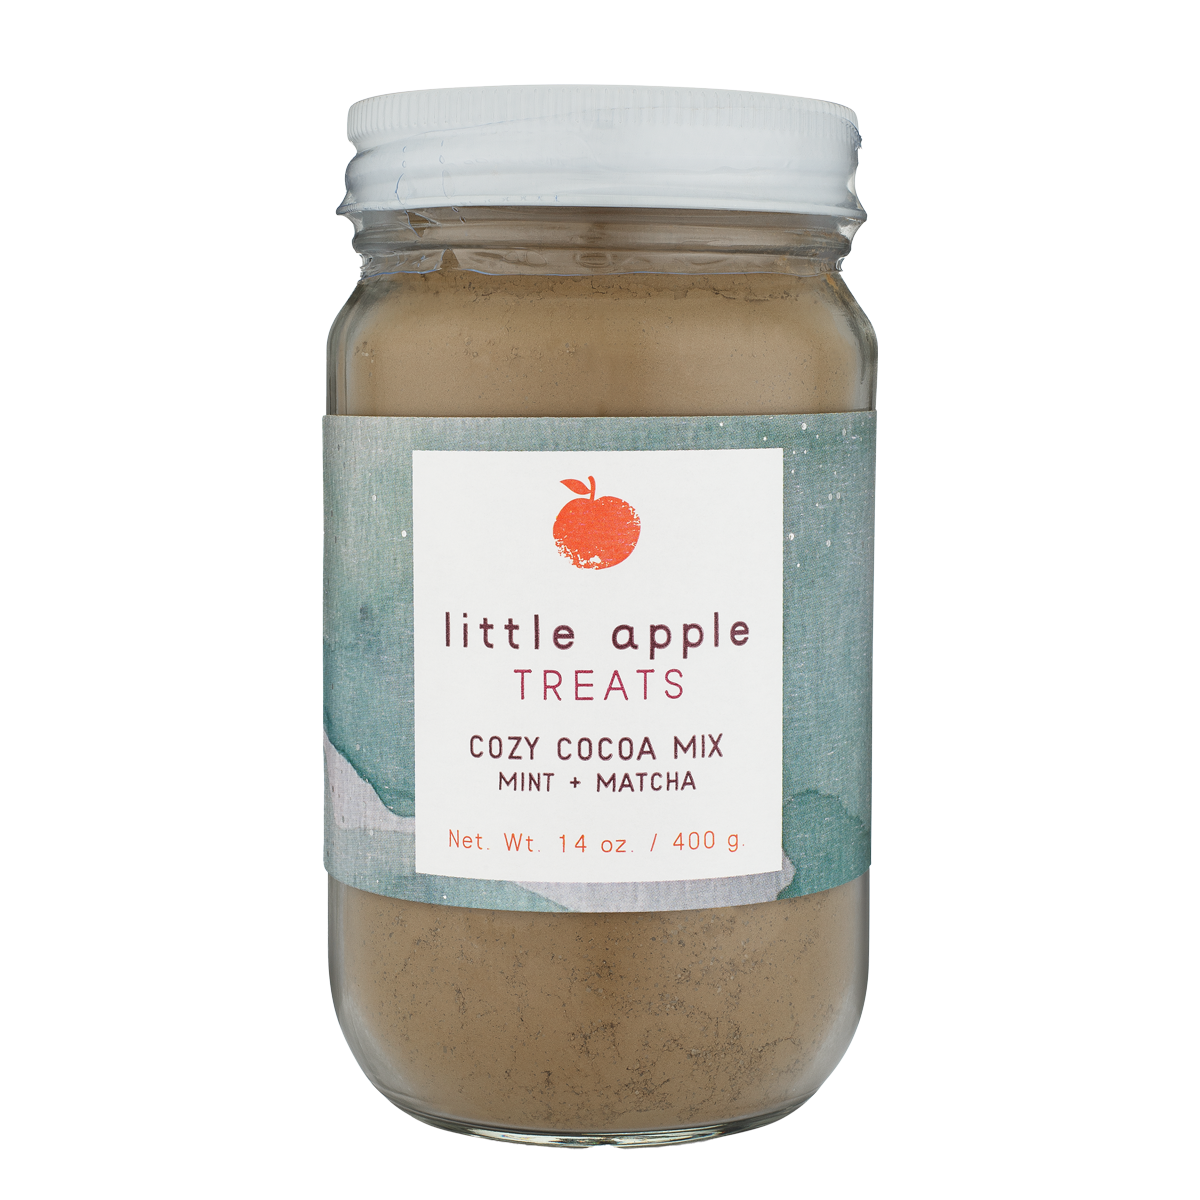 Cozy Cocoa Mix: Mint + Matcha-Mulling (tea) and Cocoa-Little Apple Treats